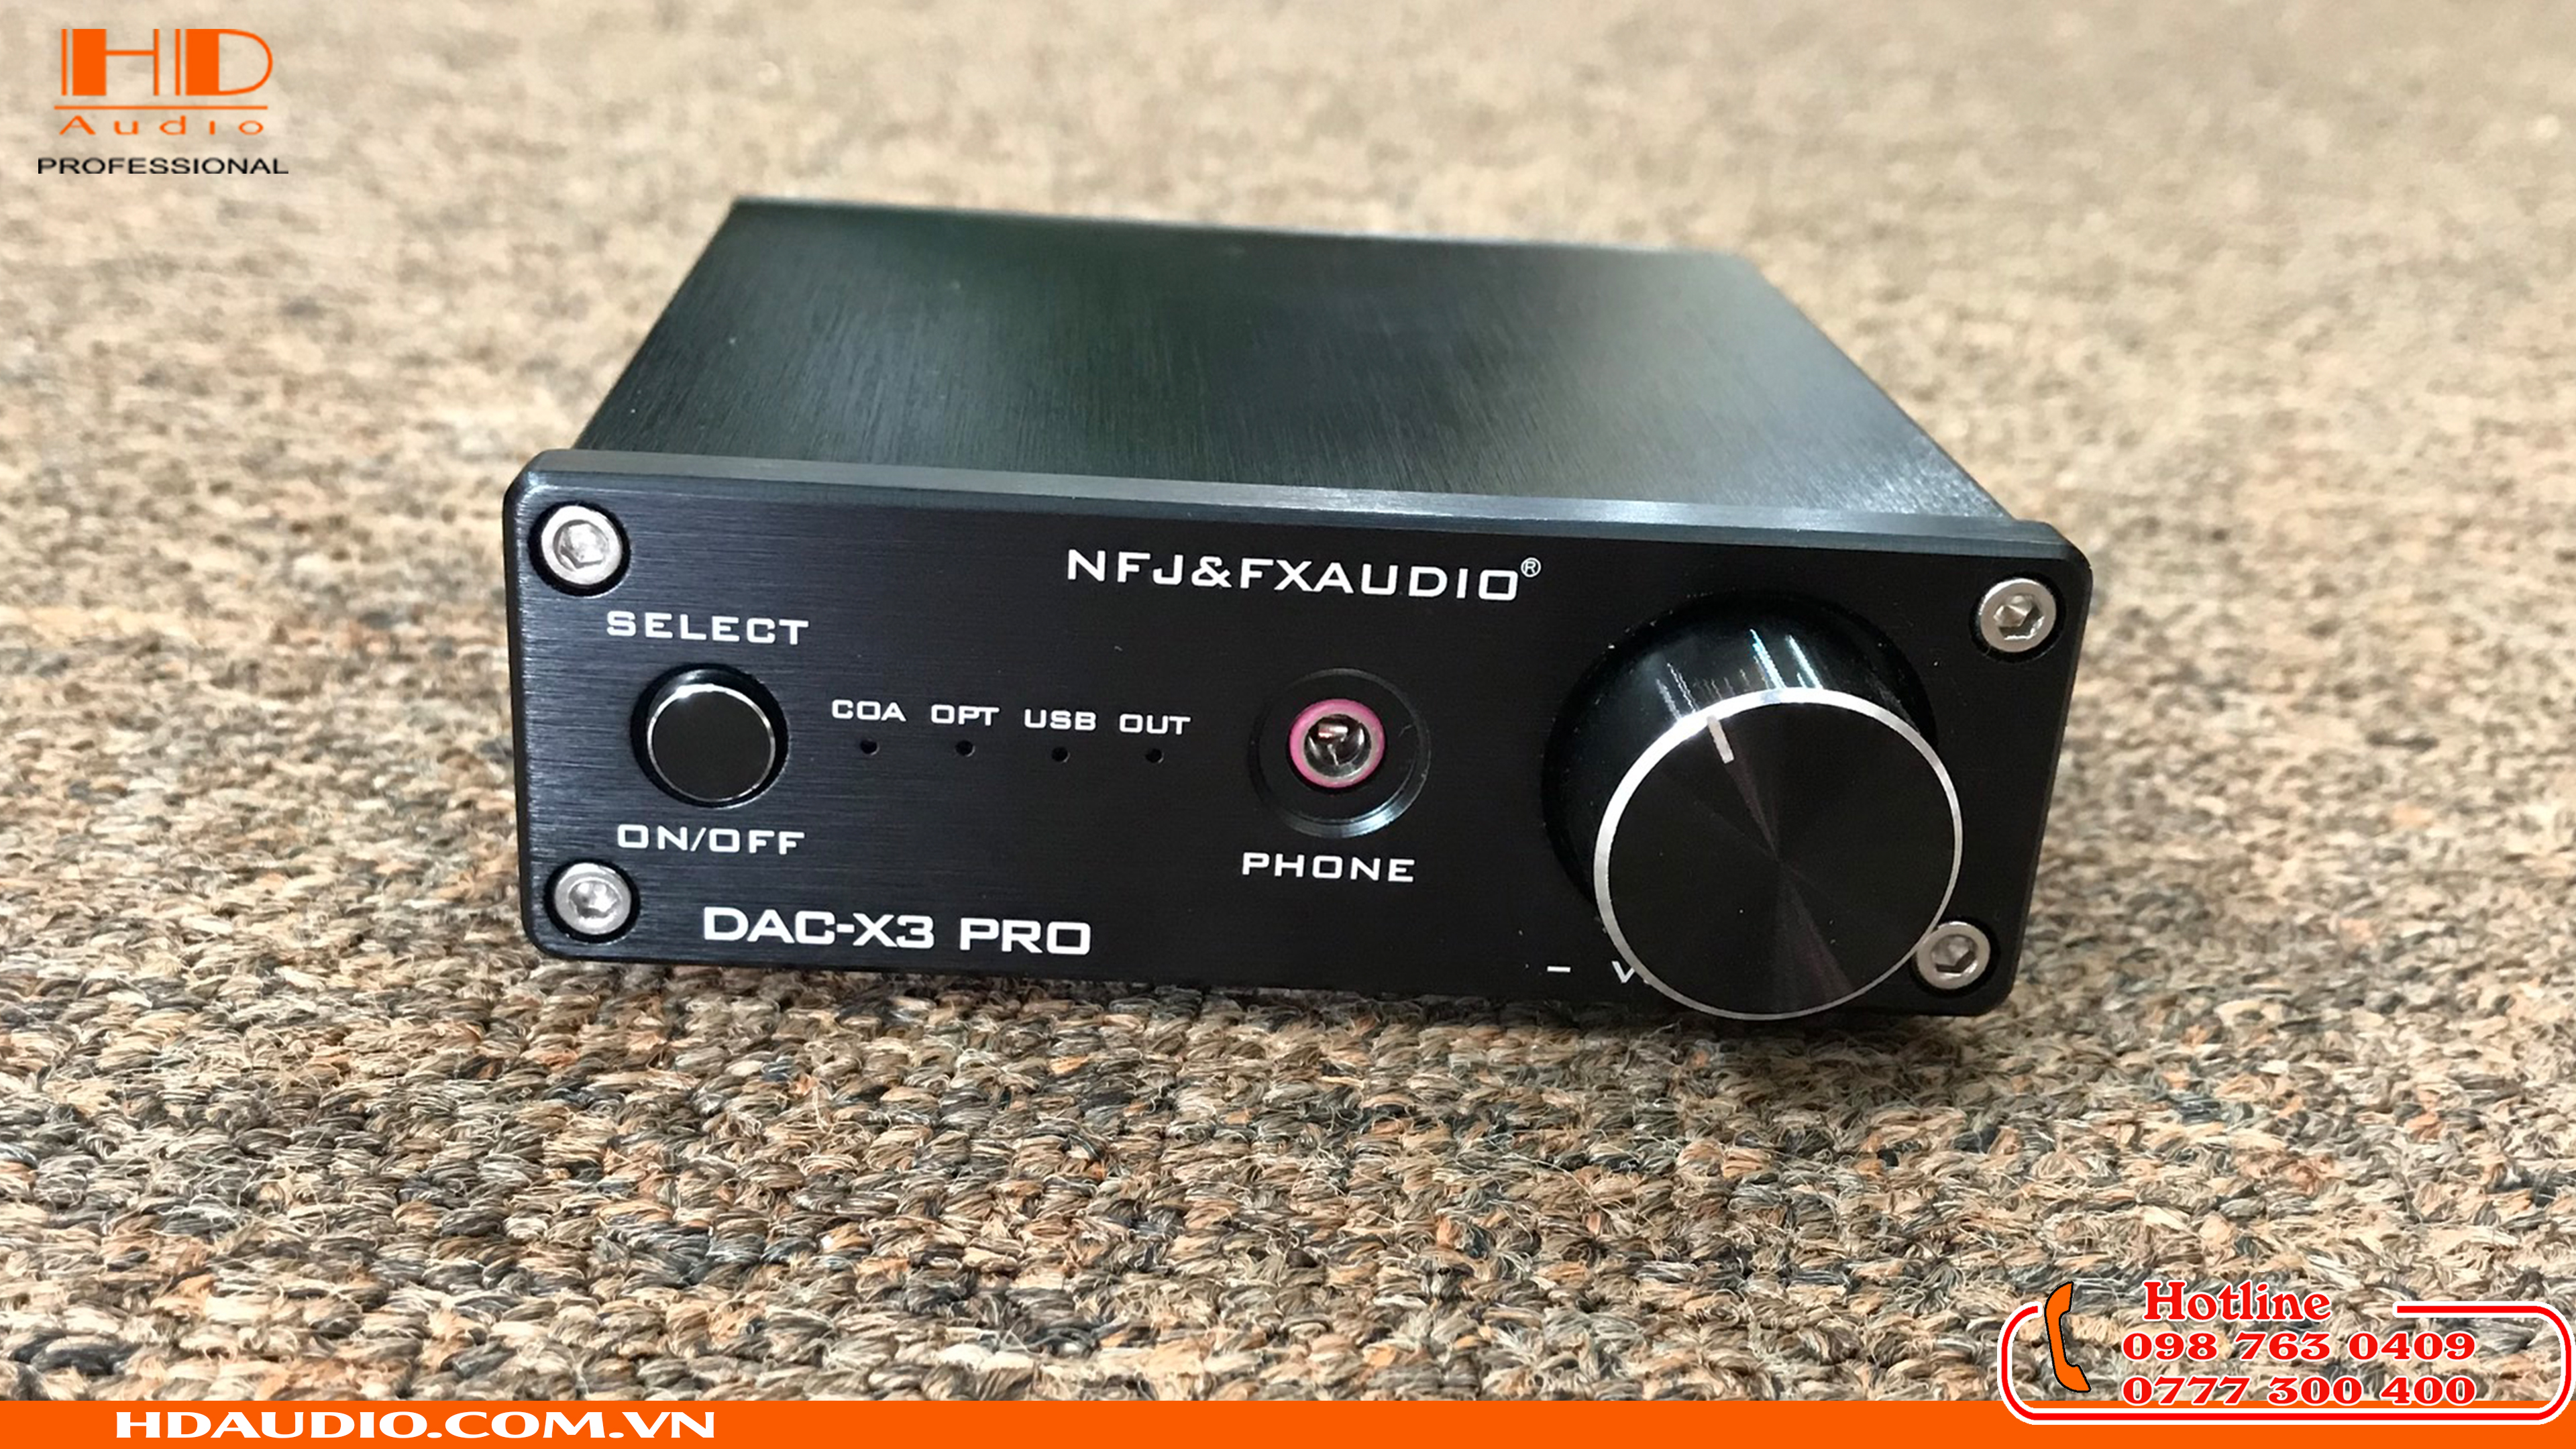 FX Audio X3Pro